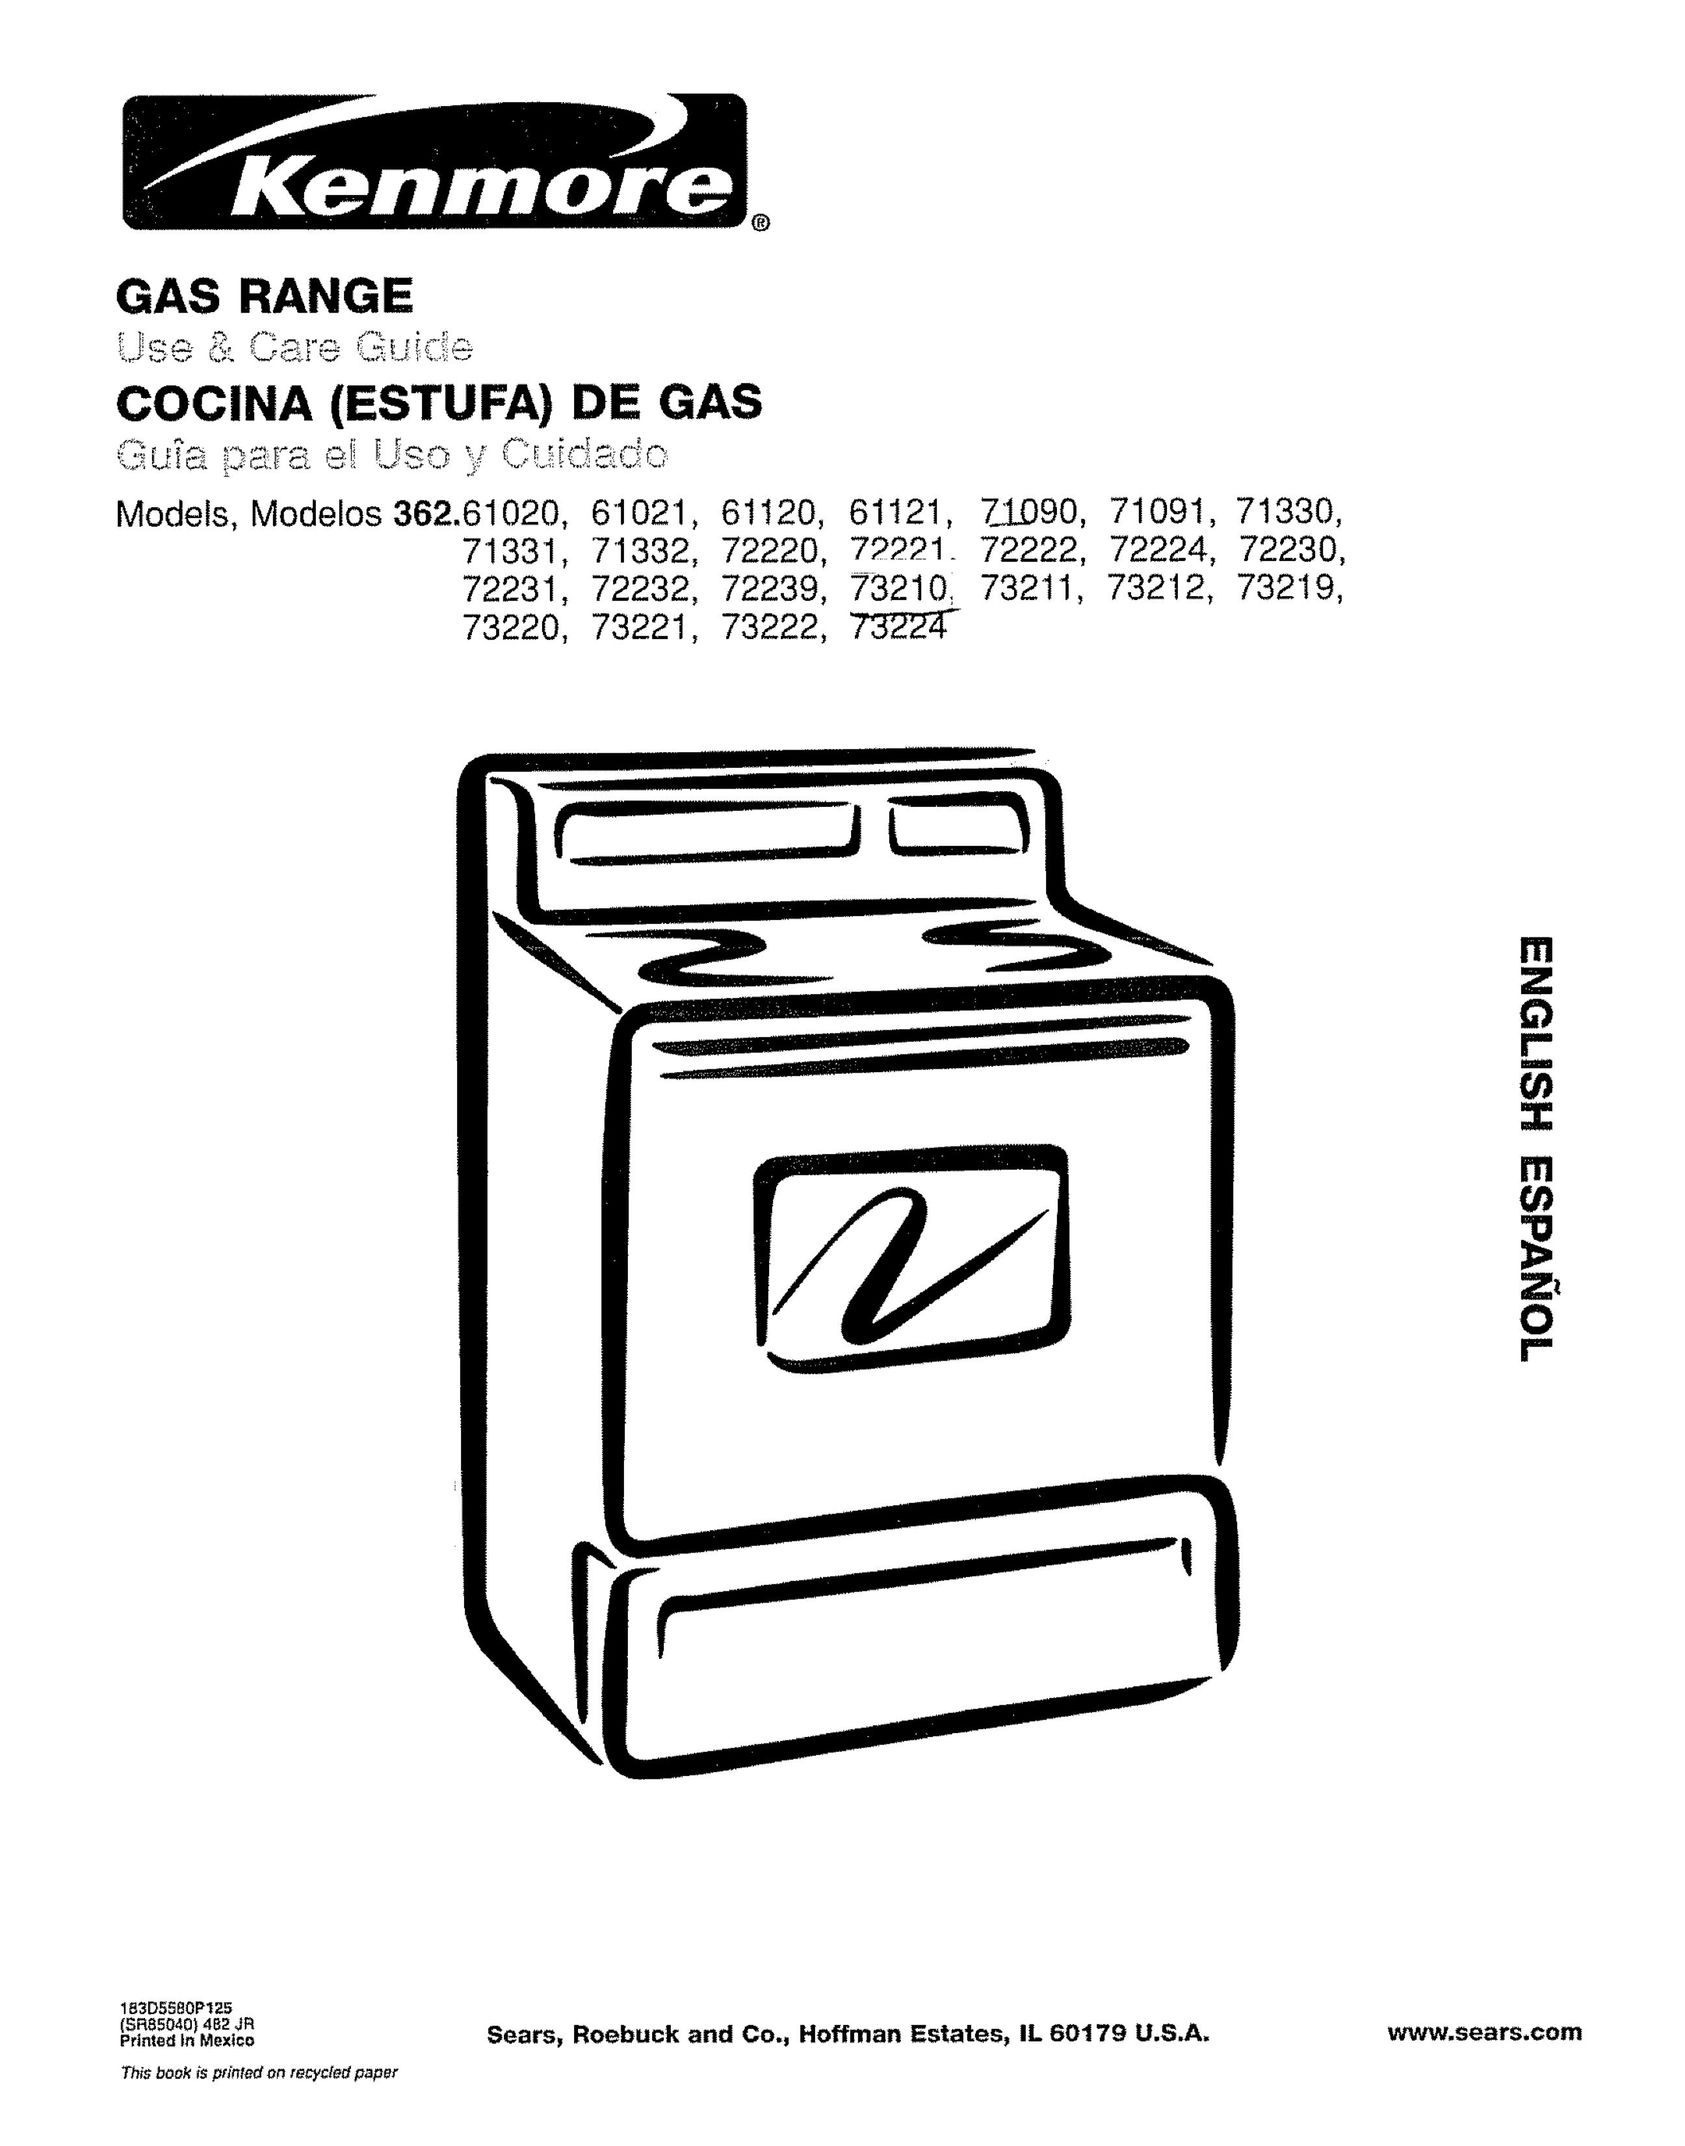 Kenmore 362.61020 Range User Manual